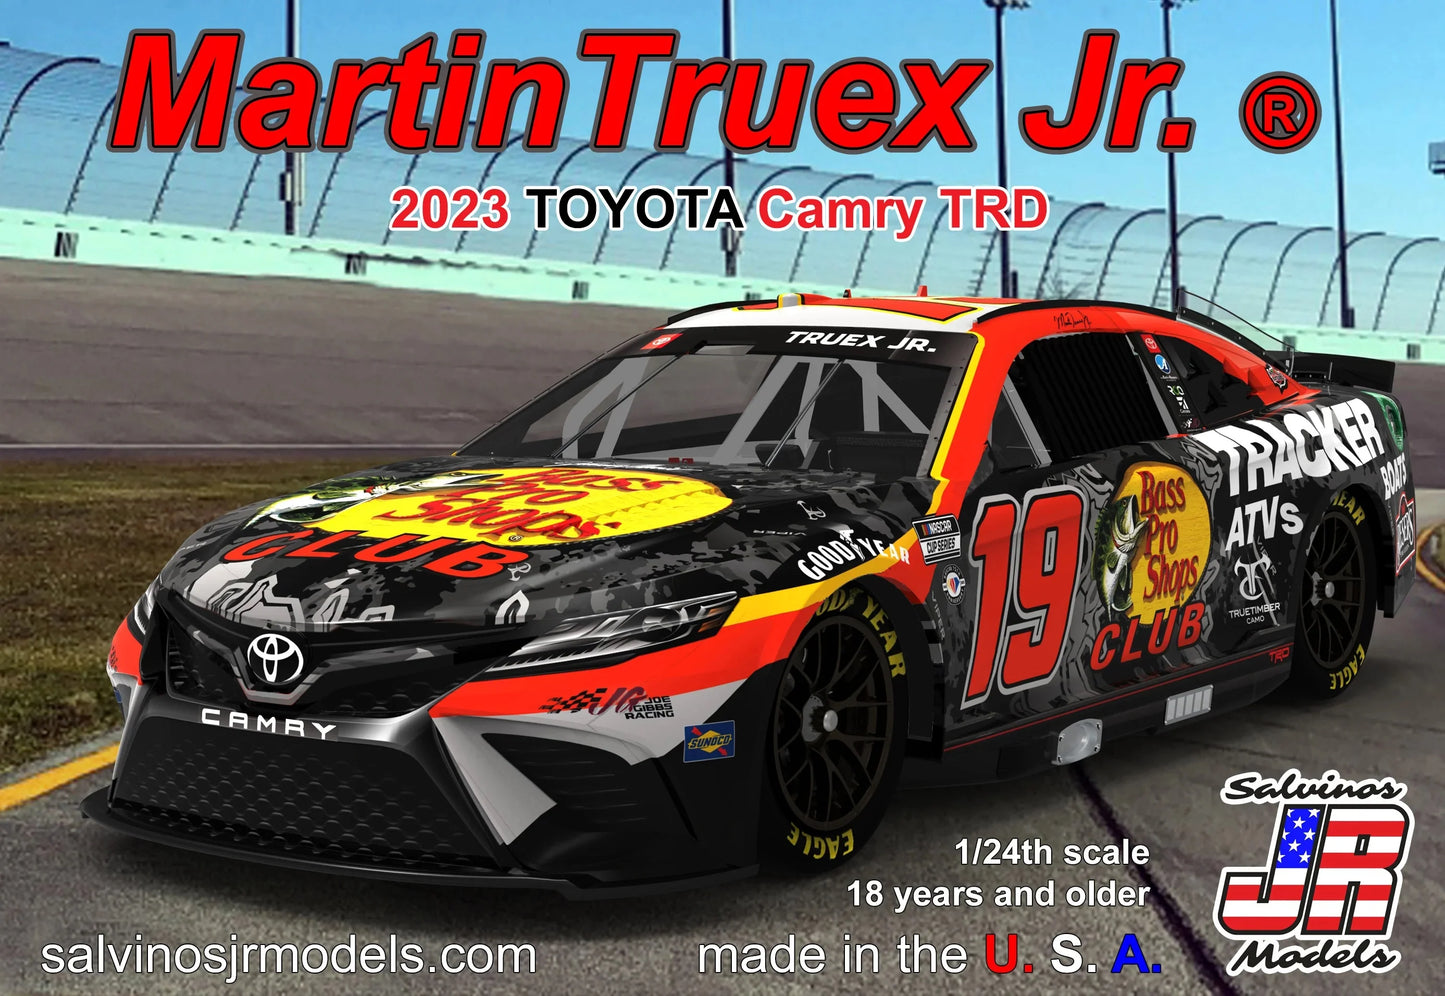 TOYOTA CAMRY TRD 2023 - MARTIN TRUEX JR. - NASCAR 2023